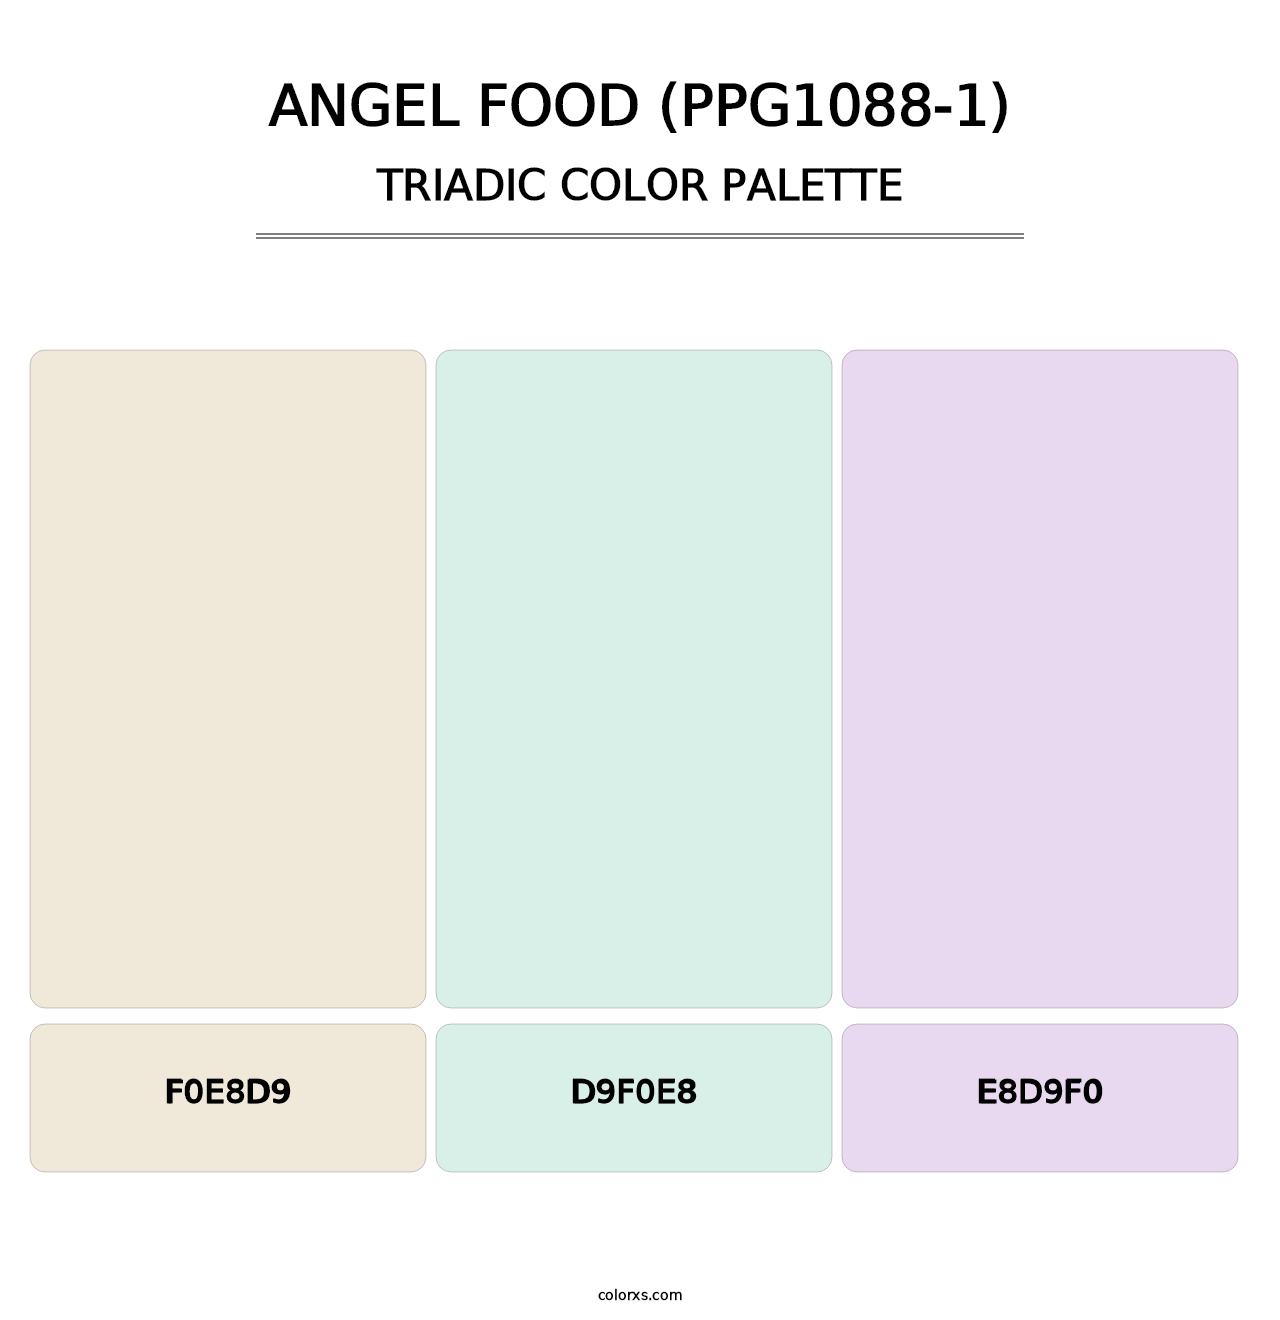 Angel Food (PPG1088-1) - Triadic Color Palette